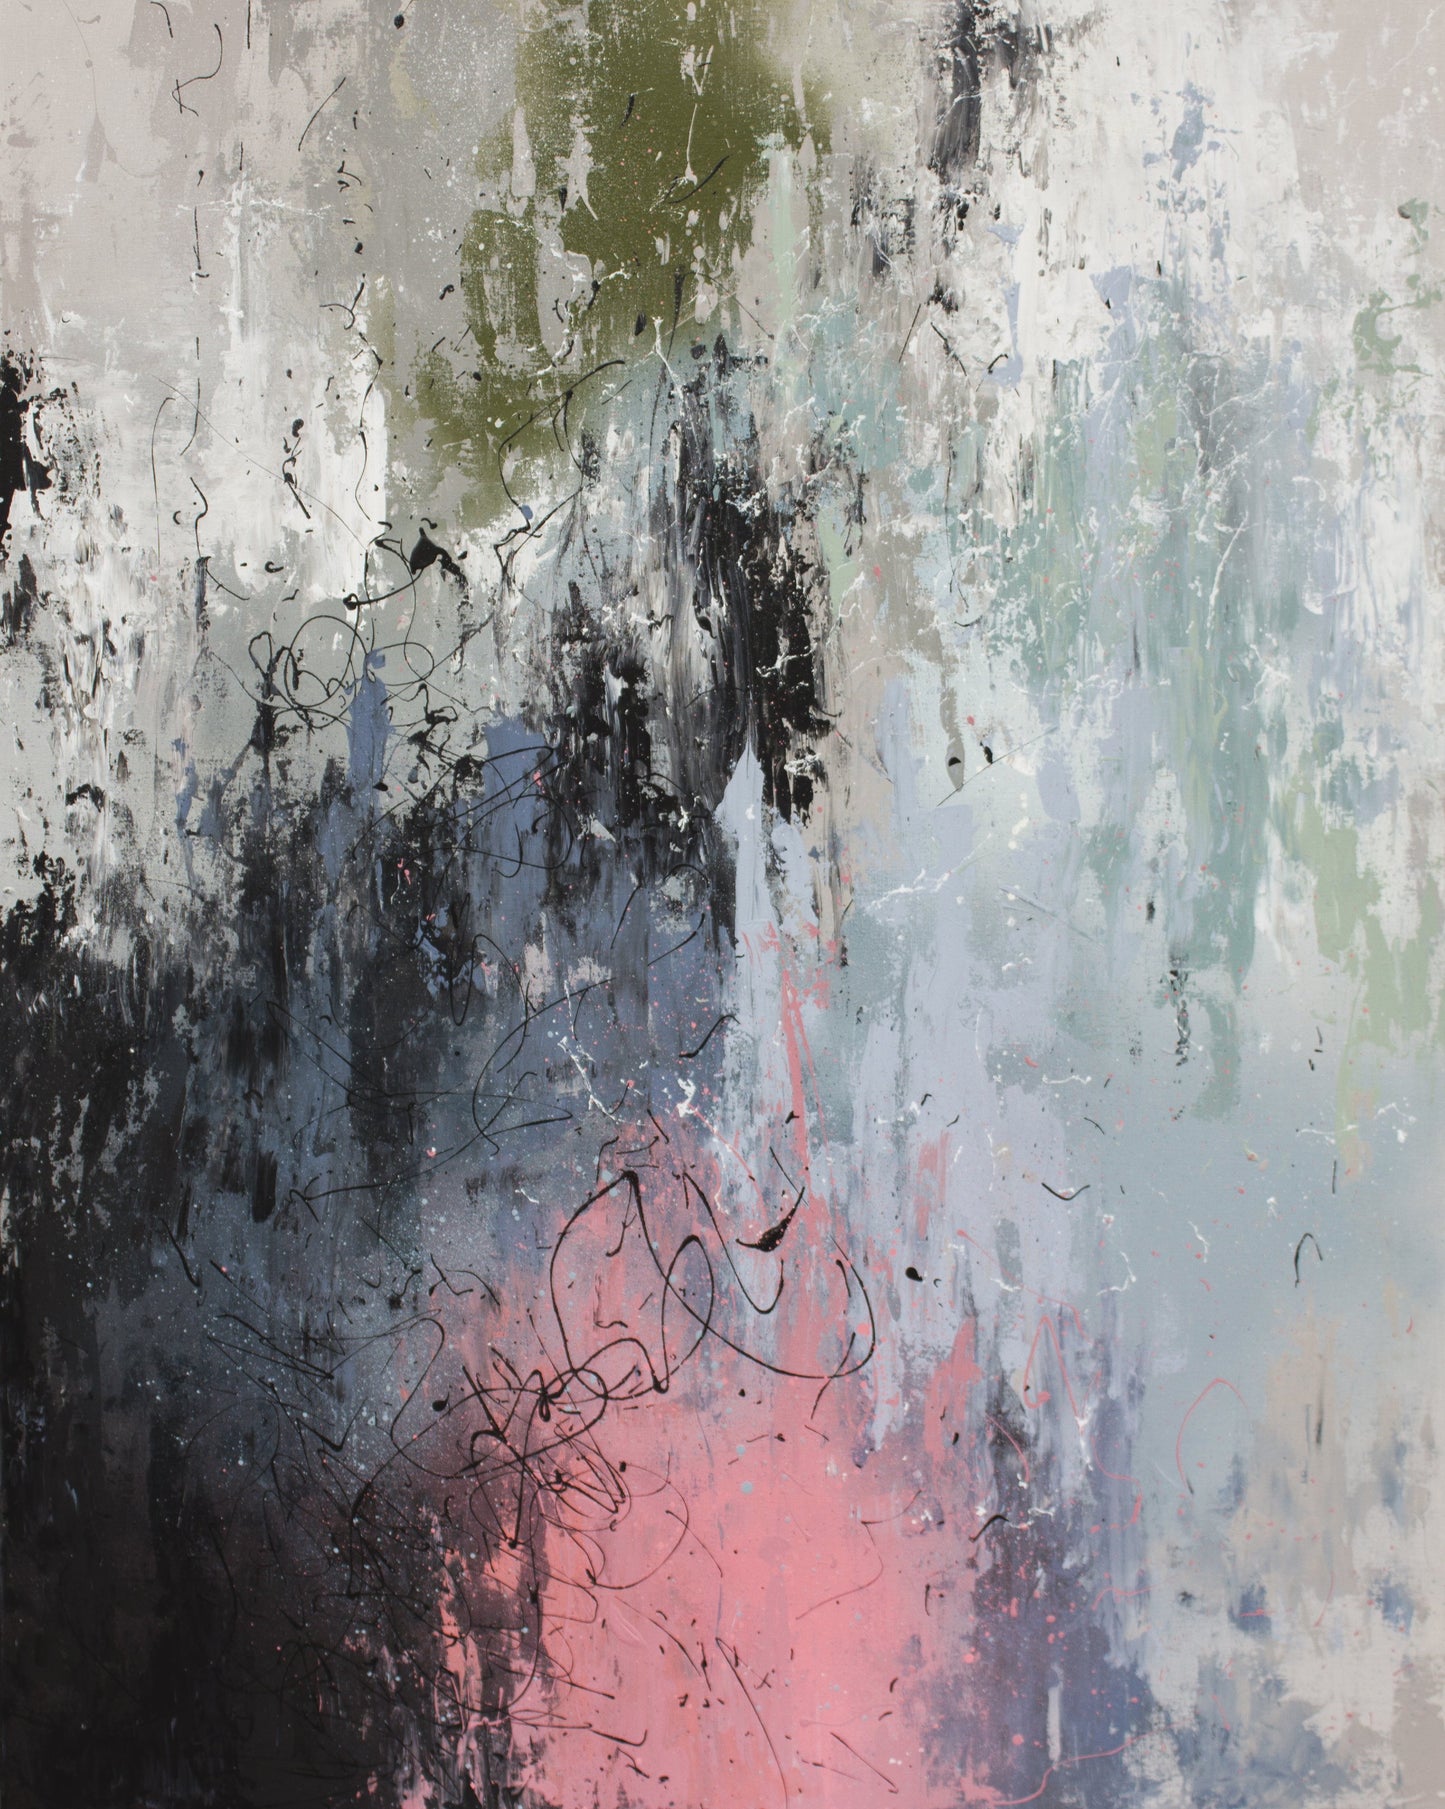 Laura Gray original painting 'Atrophy', 122cm x 76cm, Mixed medium on canvas, 2019